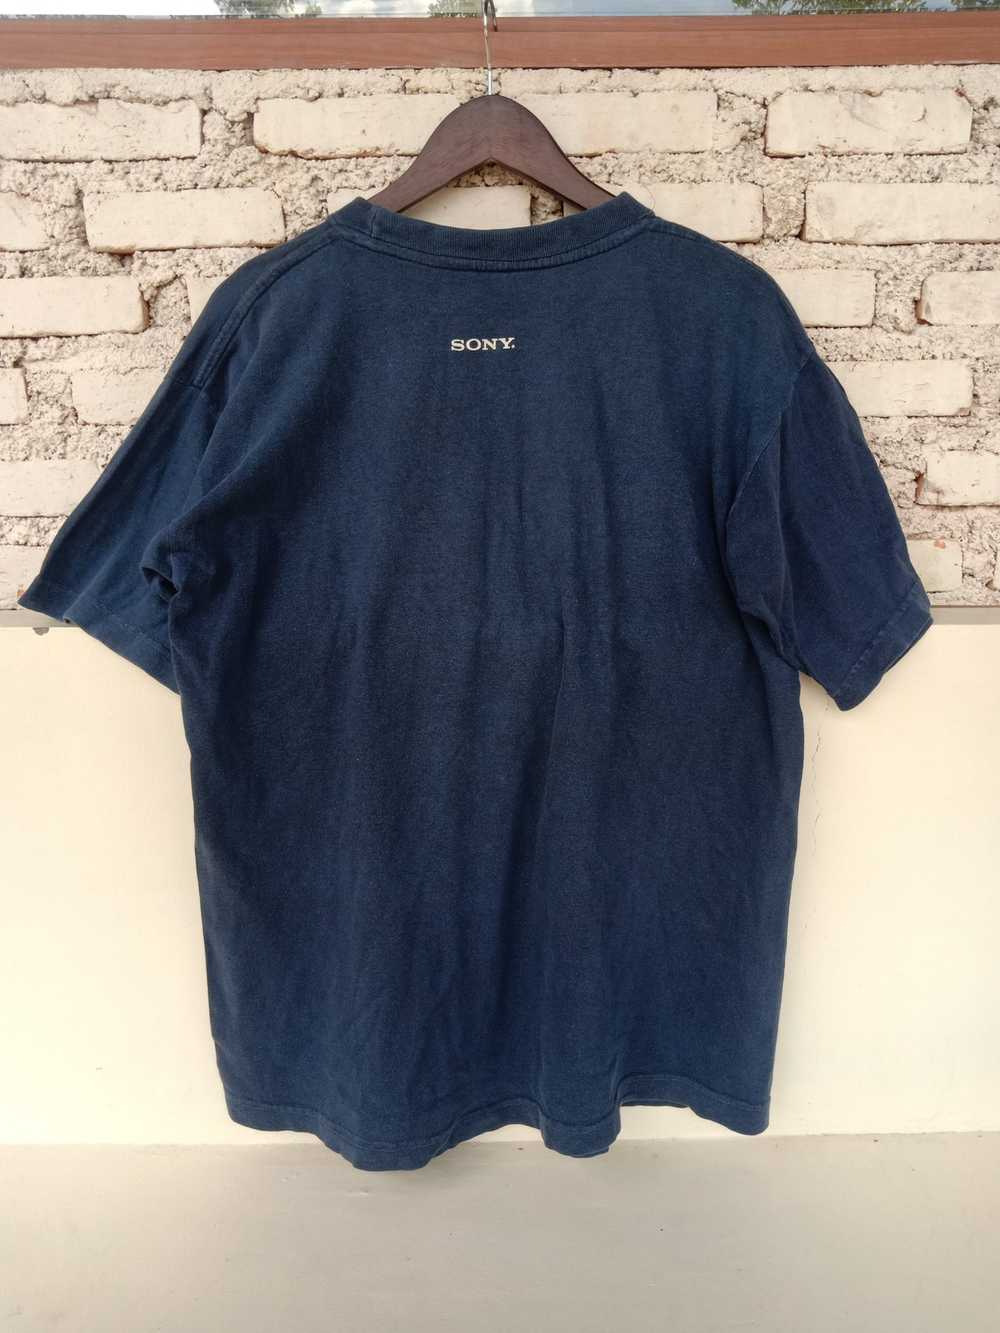 Sony × Vintage Vintage SONY Walkman promo t-shirt - image 4